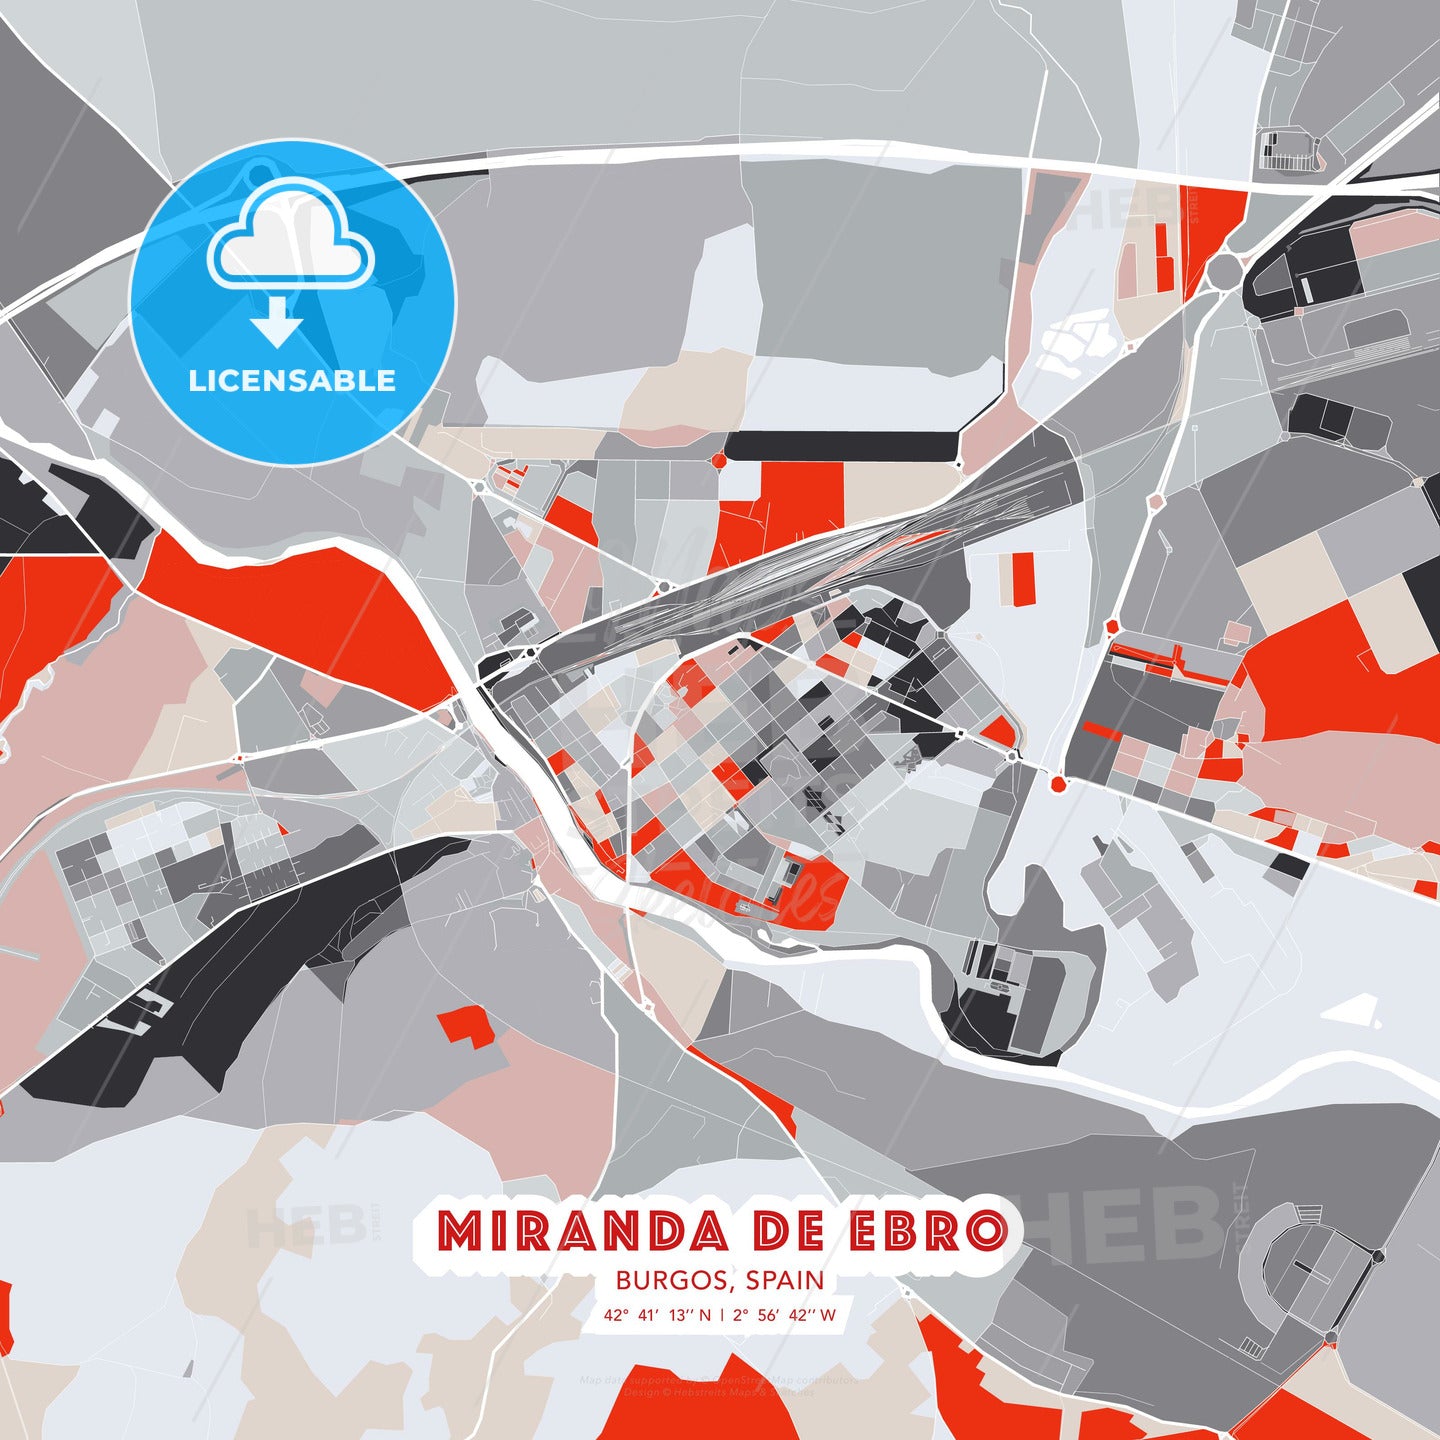 Miranda de Ebro, Burgos, Spain, modern map - HEBSTREITS Sketches